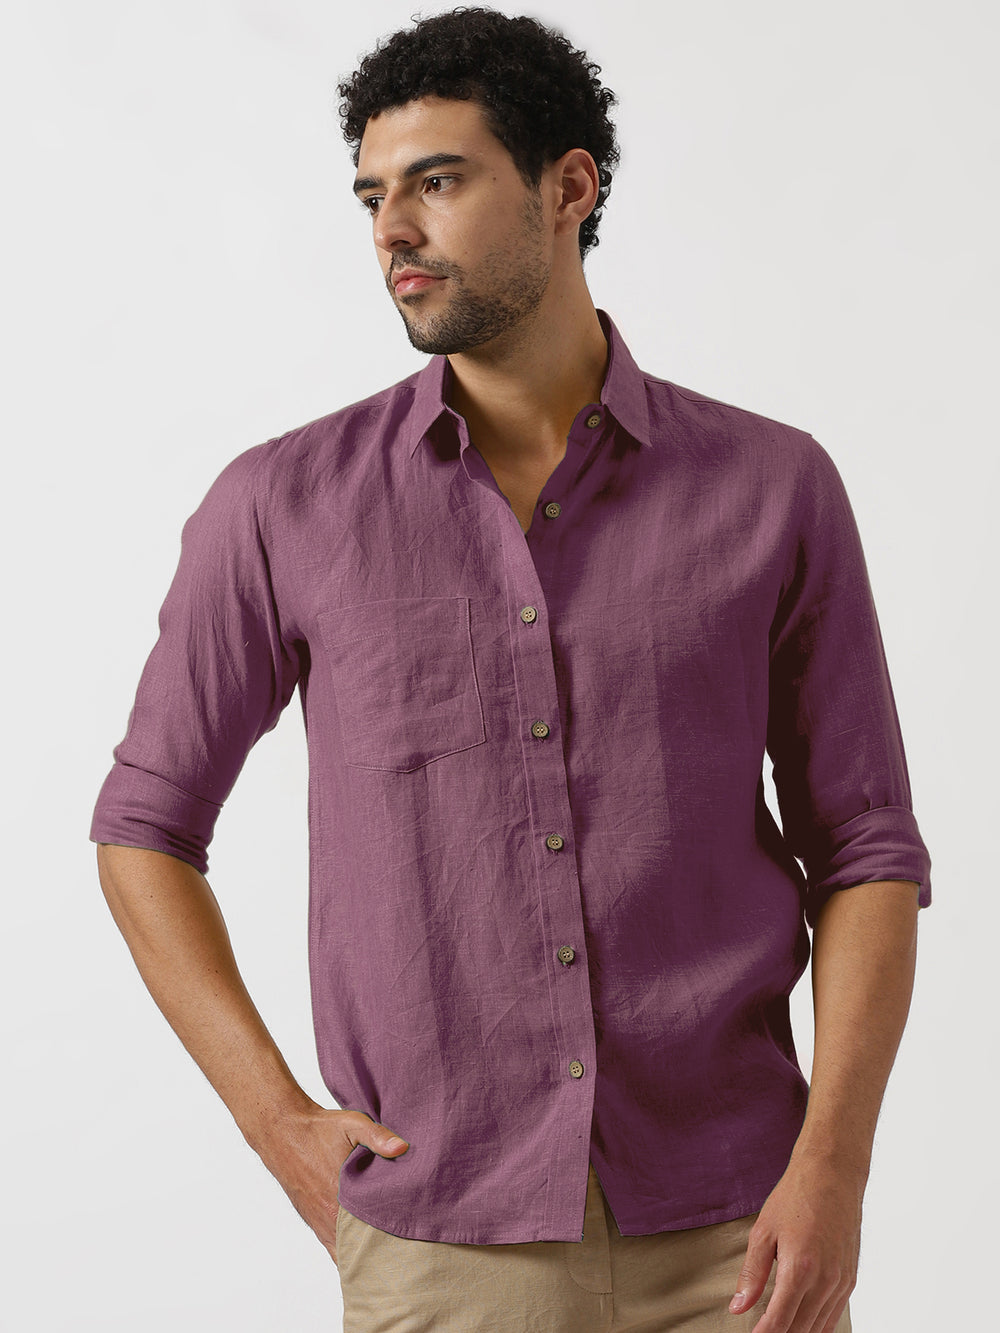 Harvey - Pure Linen Full Sleeve Shirt - Twilight Purple